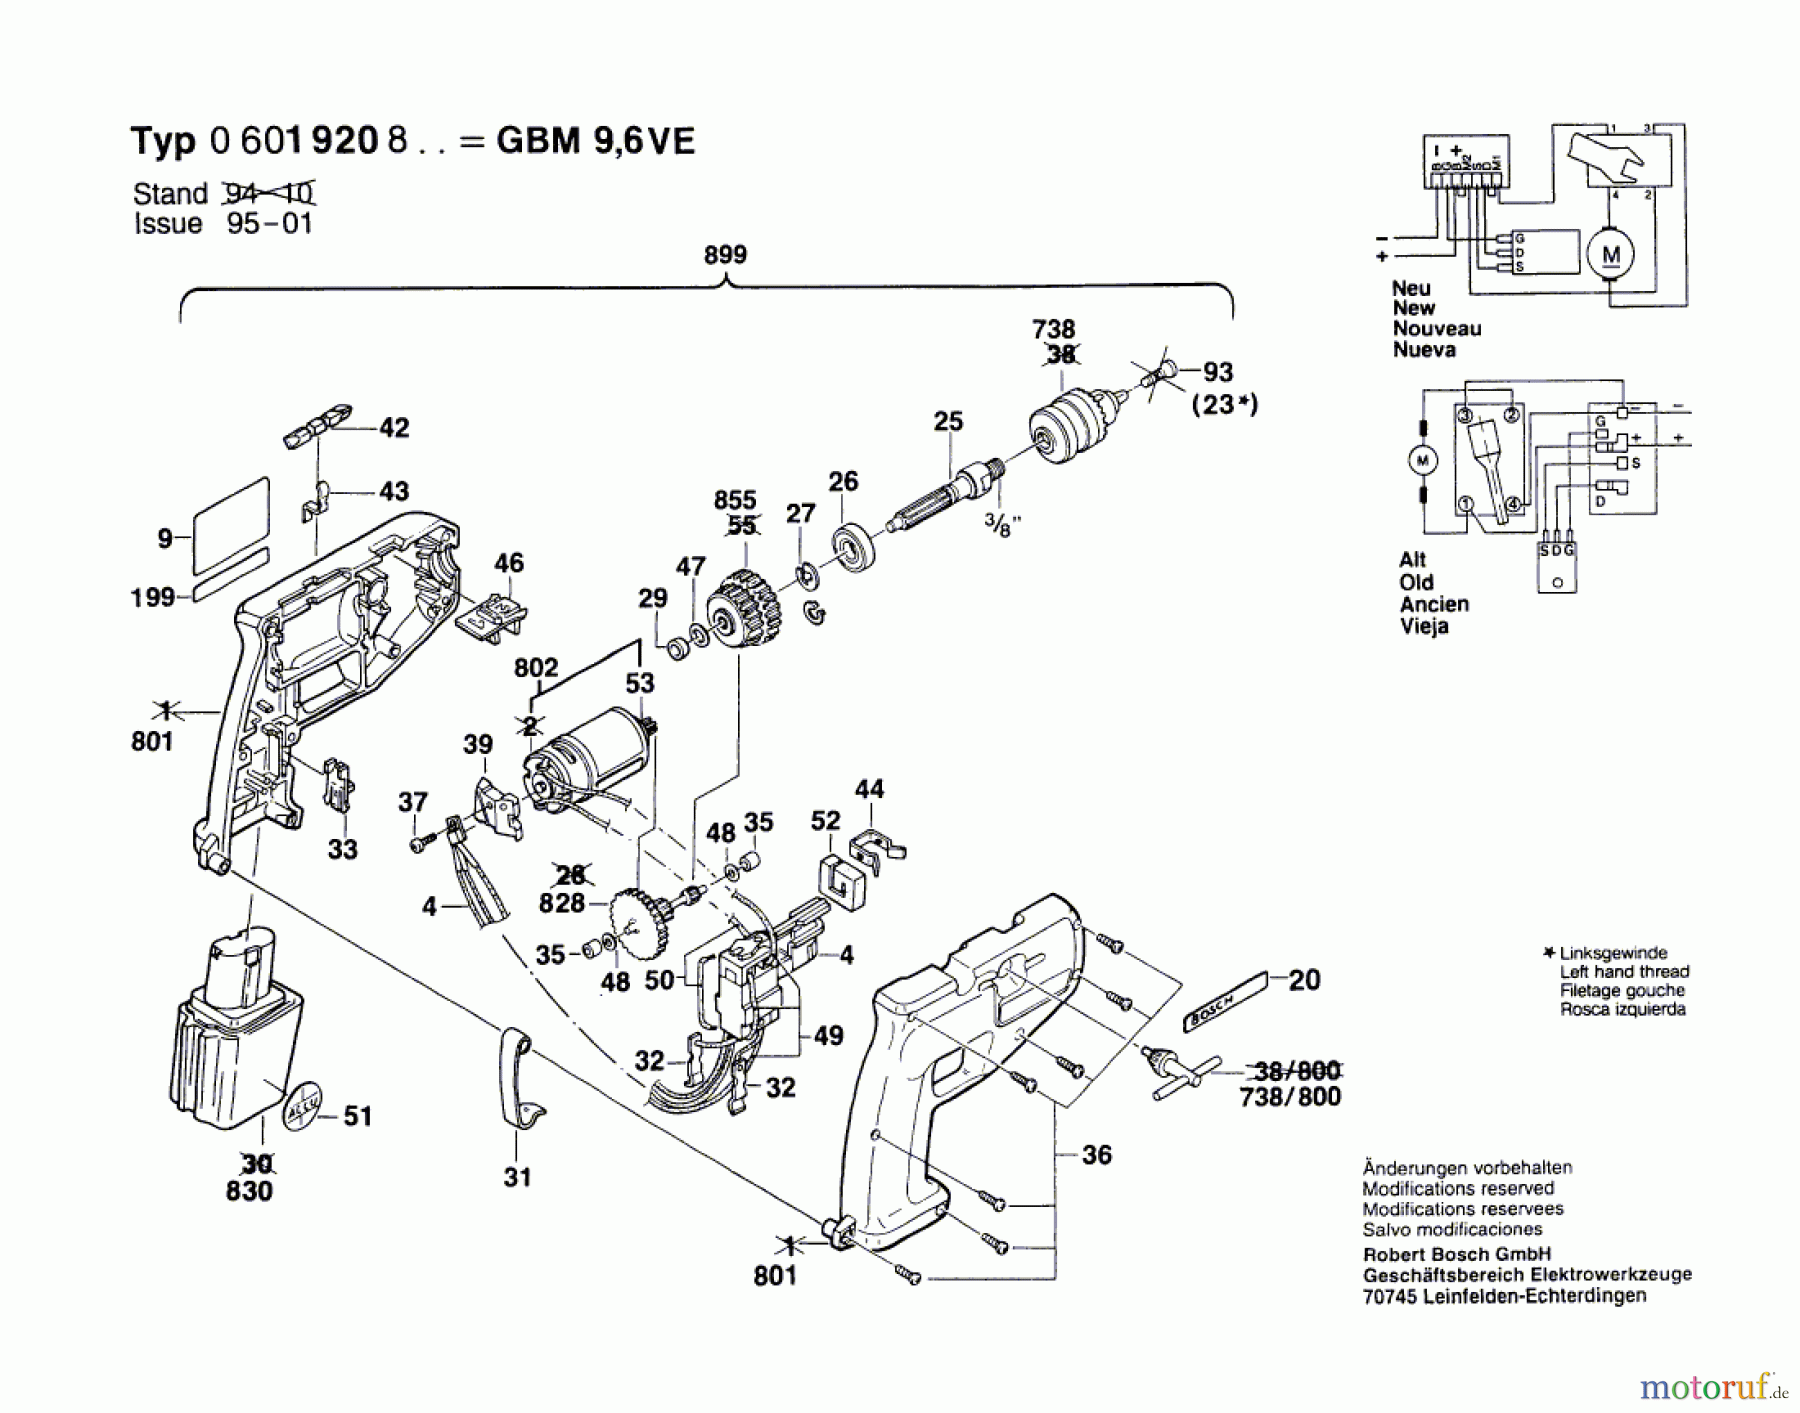  Bosch Akku Werkzeug Akku-Bohrmaschine GBM 9,6 VE Seite 1